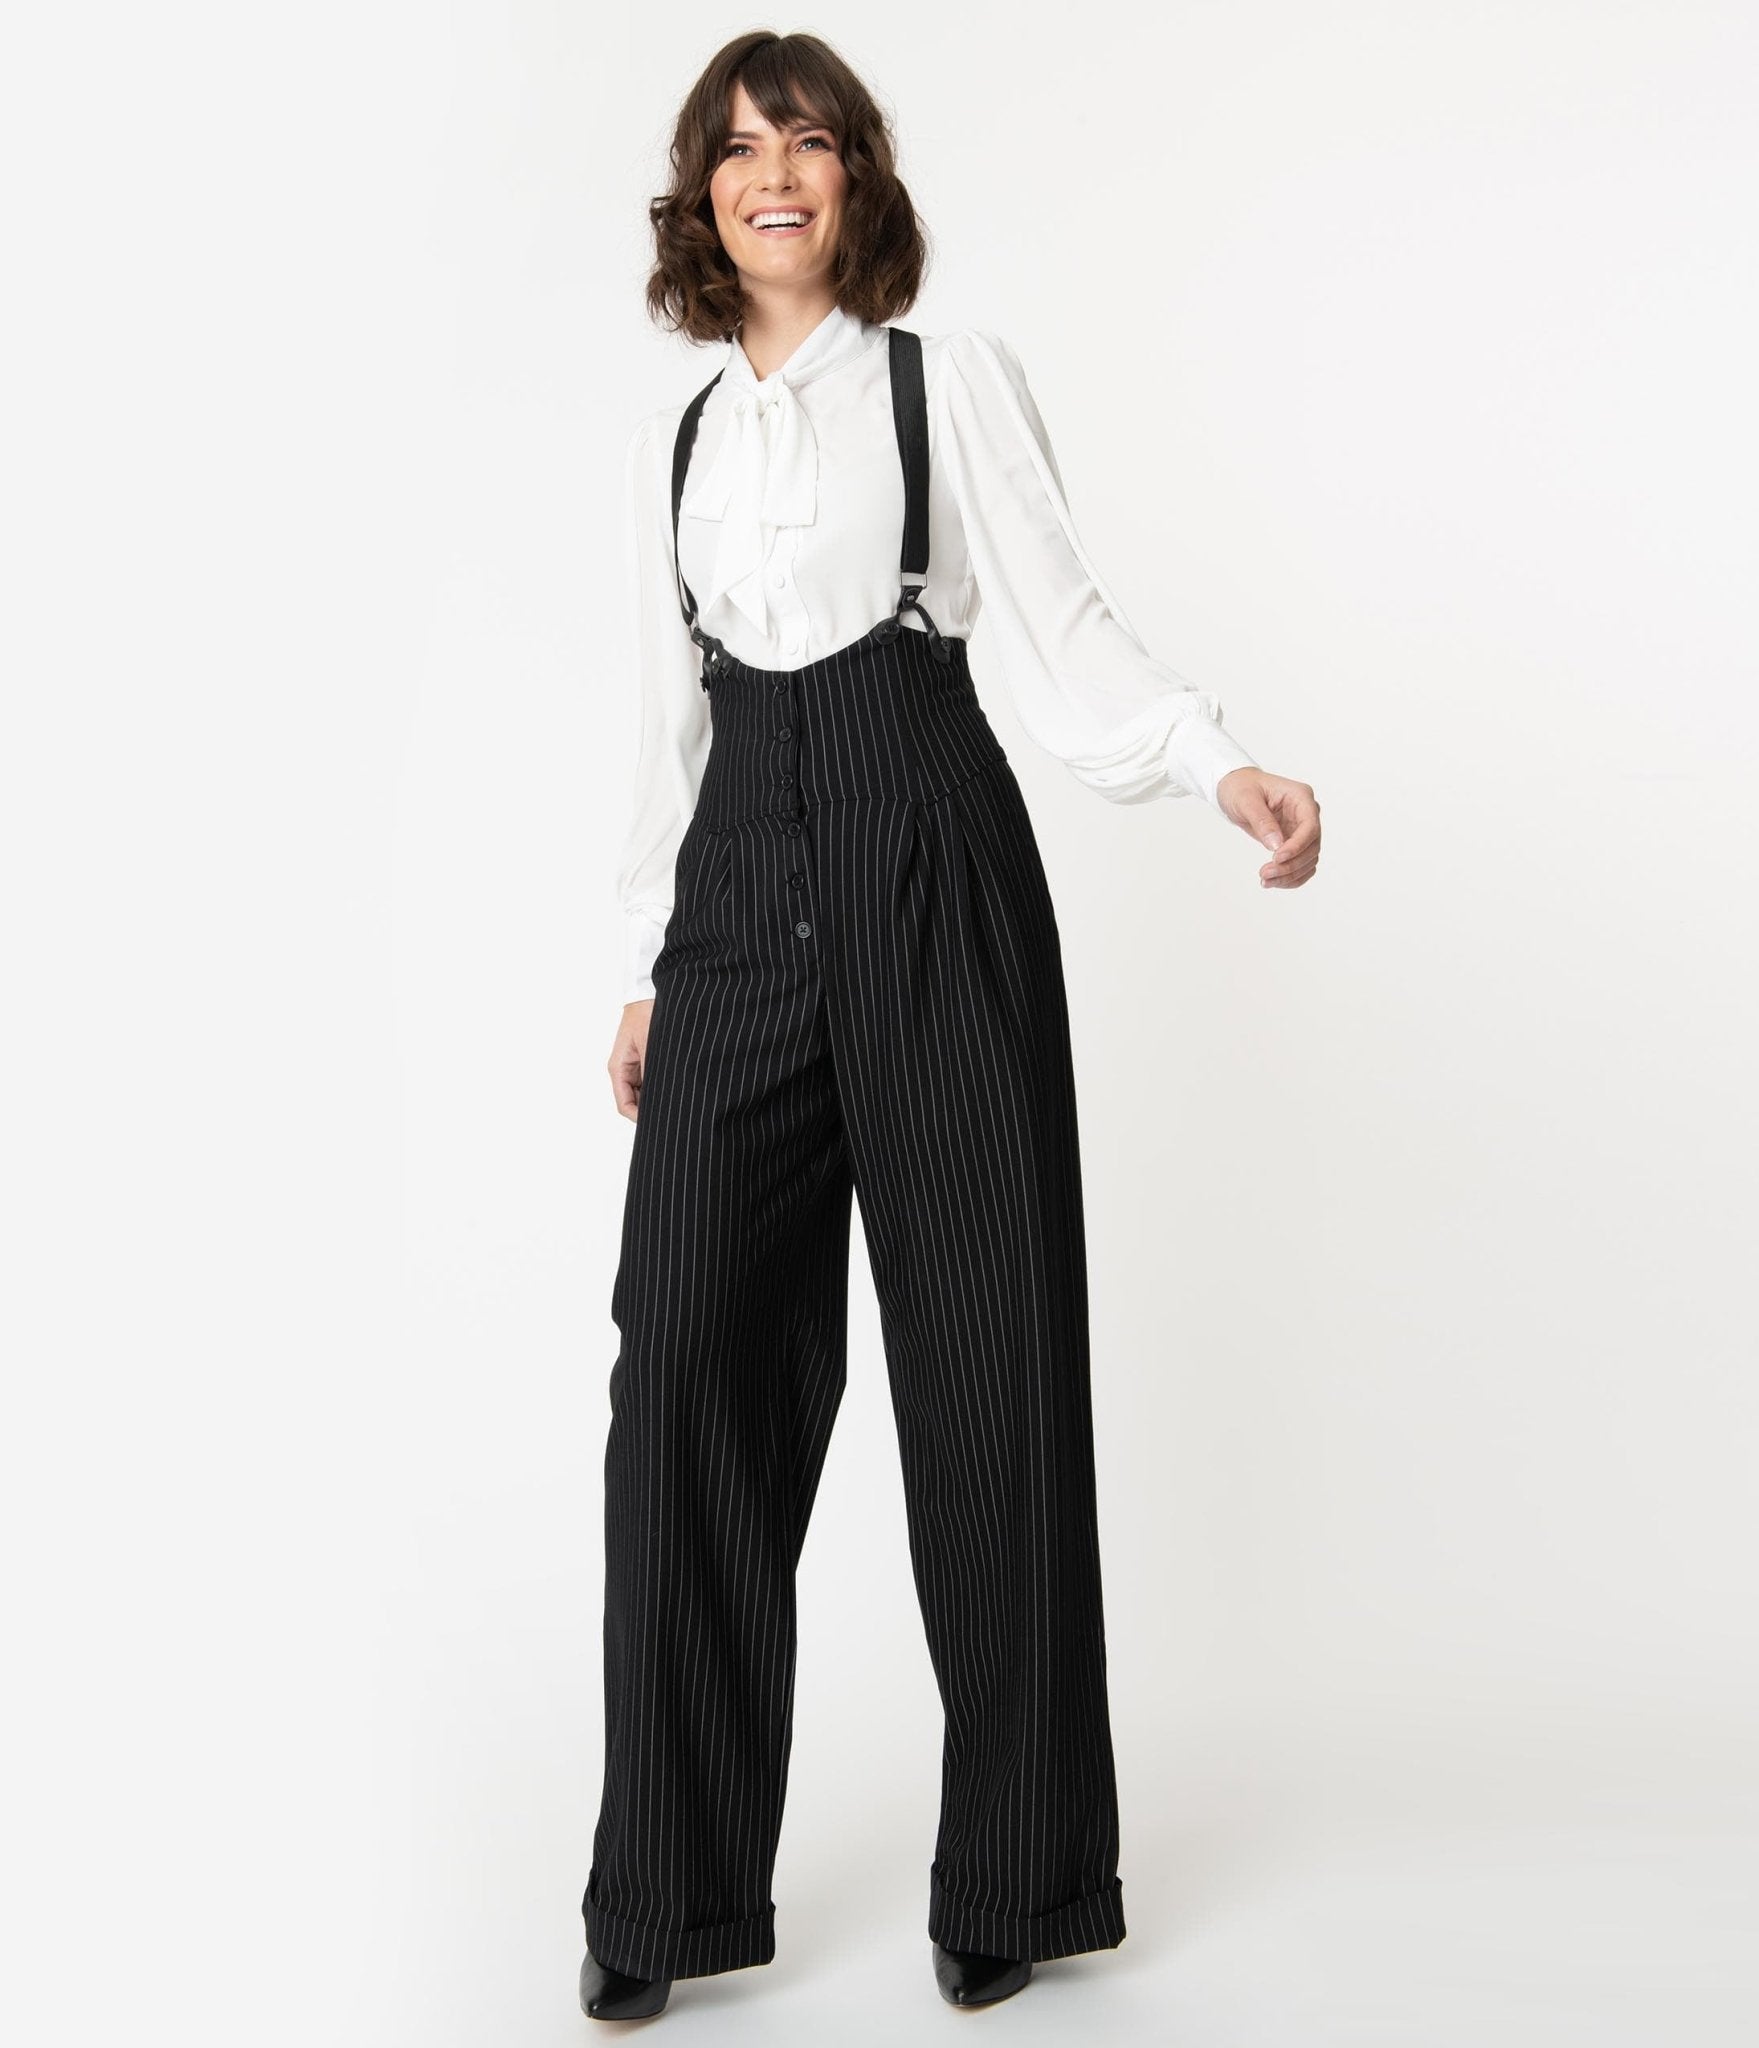 Buy chenshijiu Women Suspender Pants High Waist Wide Leg Palazzo Trousers  Overalls Black M at Amazon.in